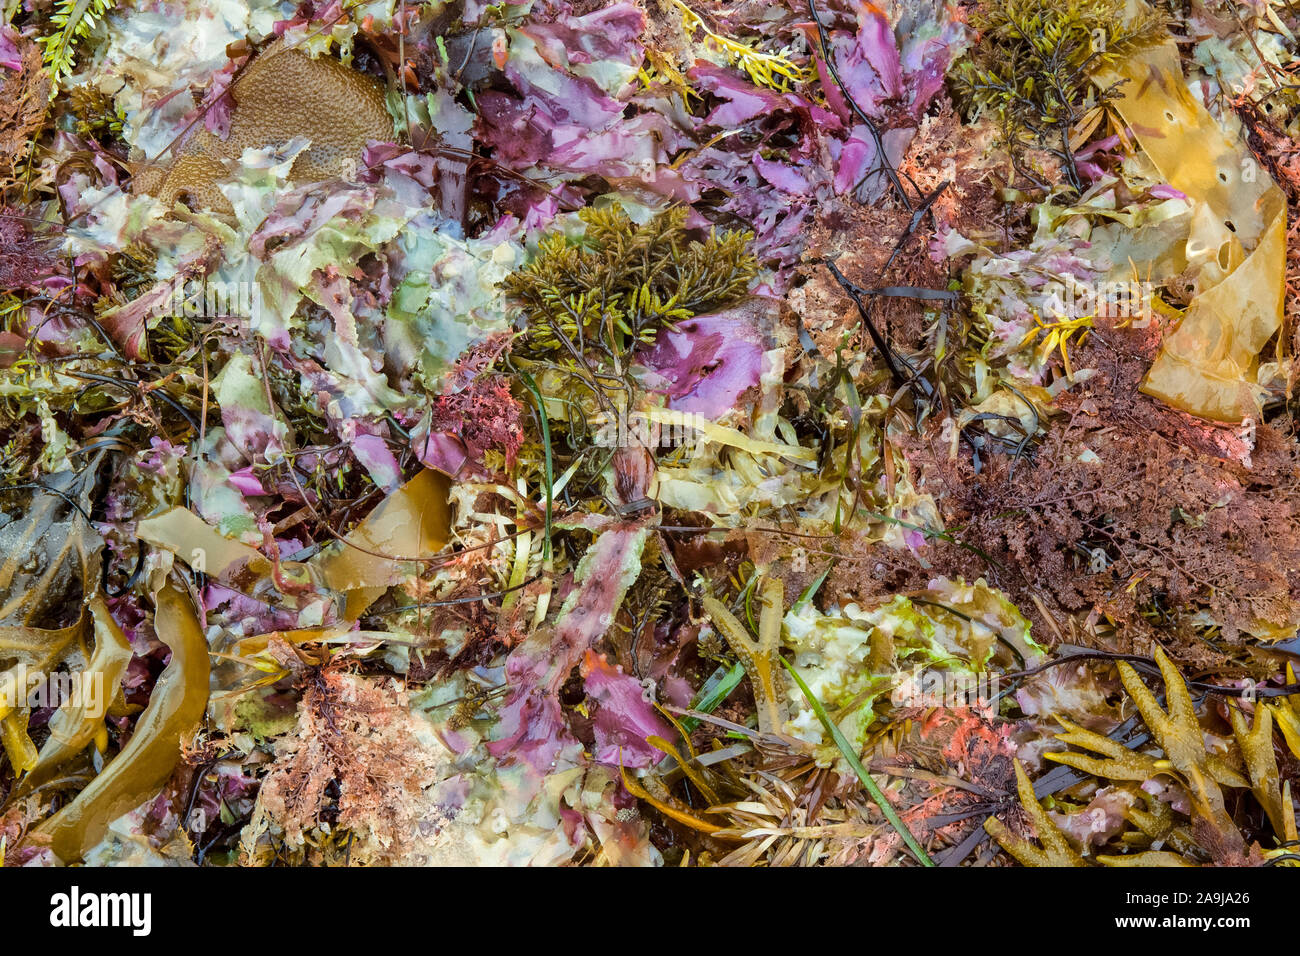 beach wrack - washed ashore mixed algae and seagrasses, seaweeds, sea lettuce, Ulva species, etc., Cape Alava, Flattery Rocks National Wildlife Refuge Stock Photo